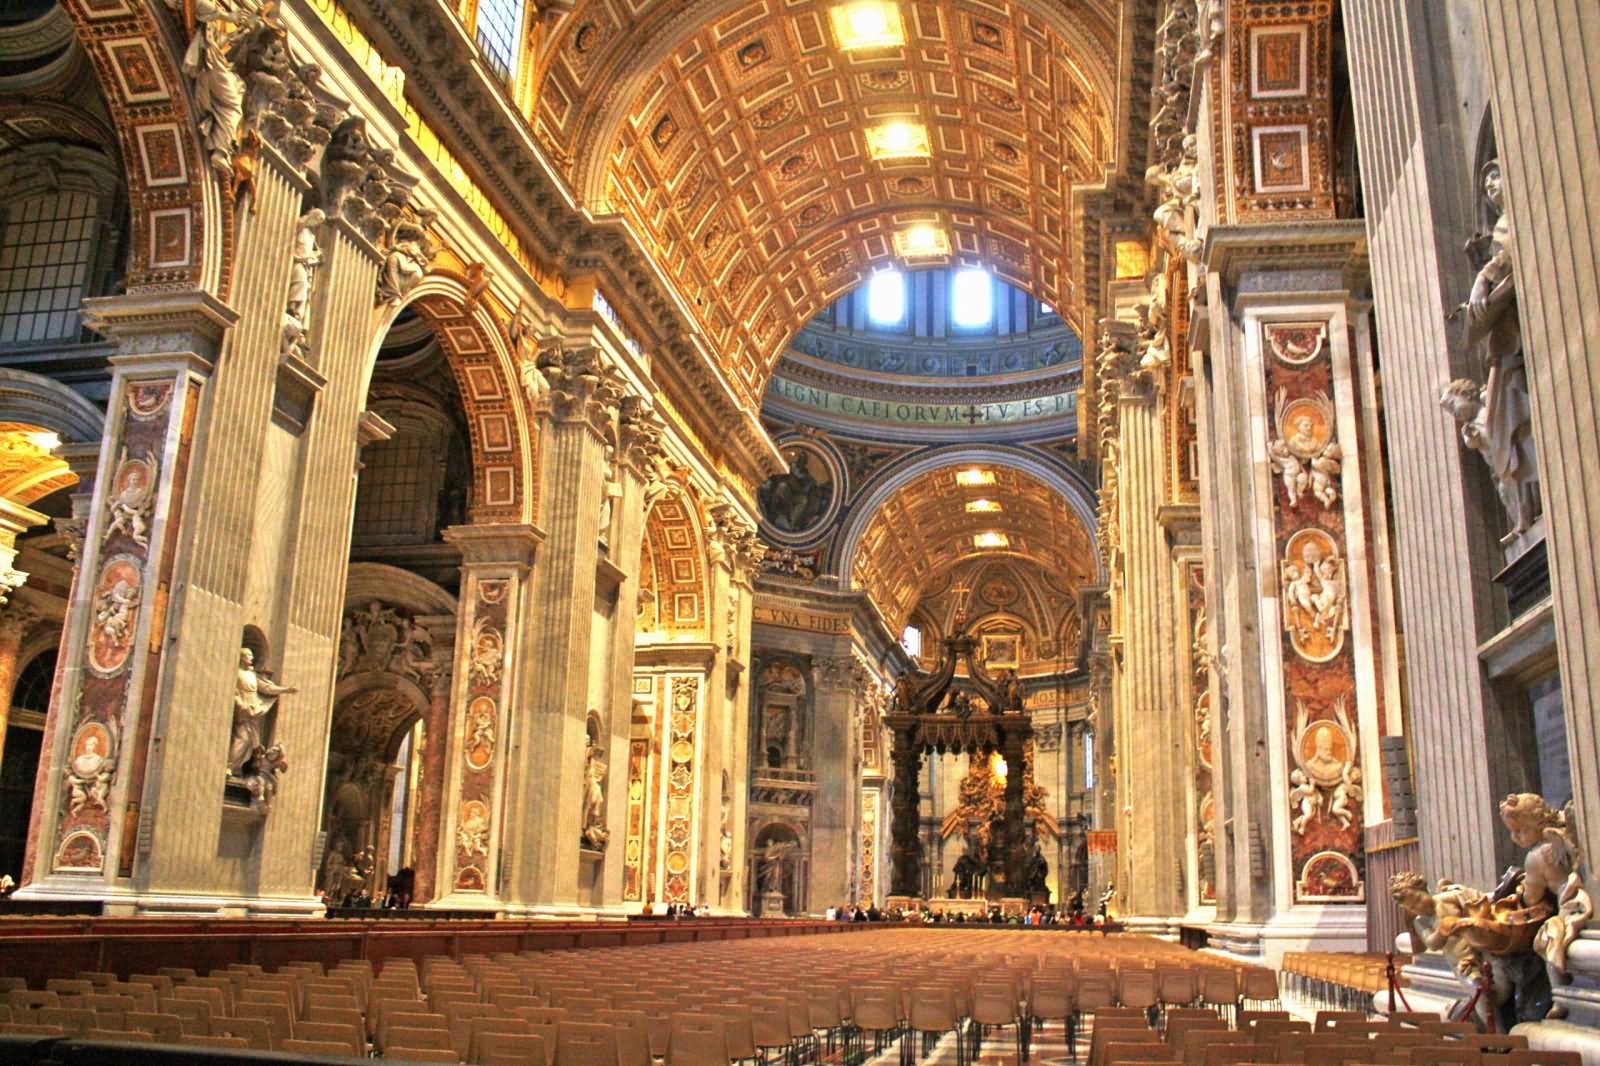 Amazing Interior View Of St. Peter's Basilica